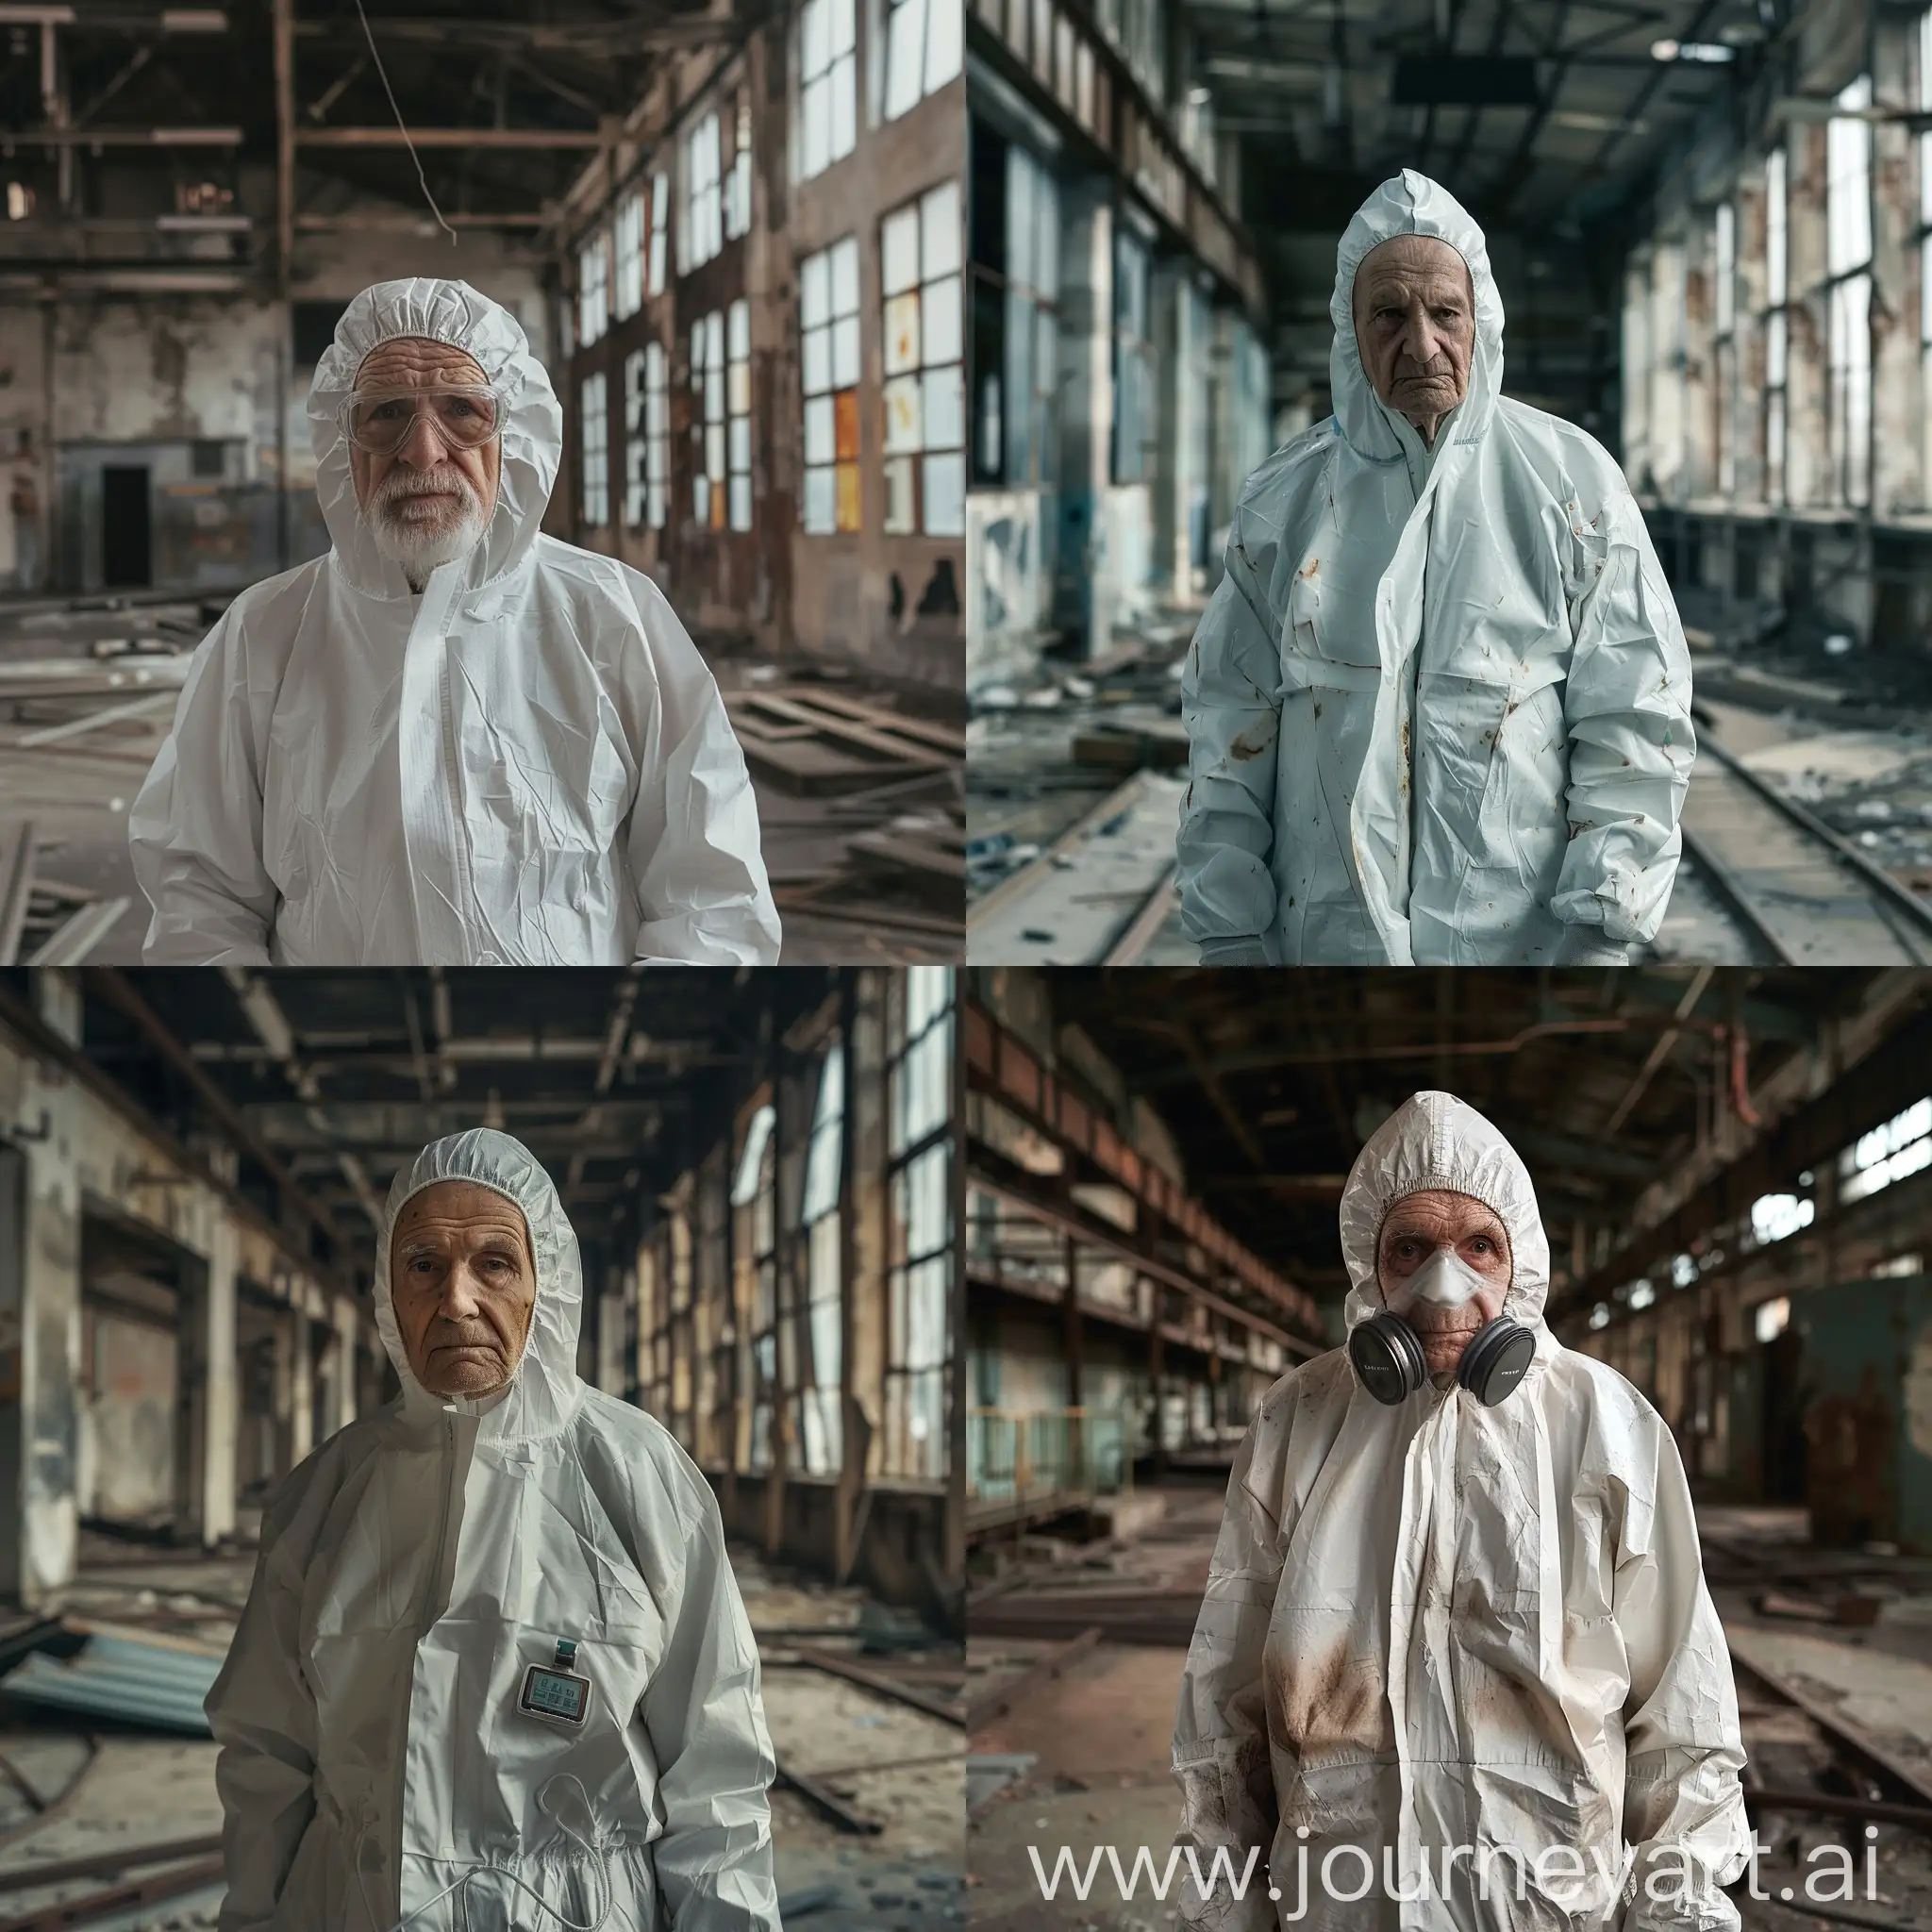 An elderly old man wearing a hazmat suit in an abandoned factory